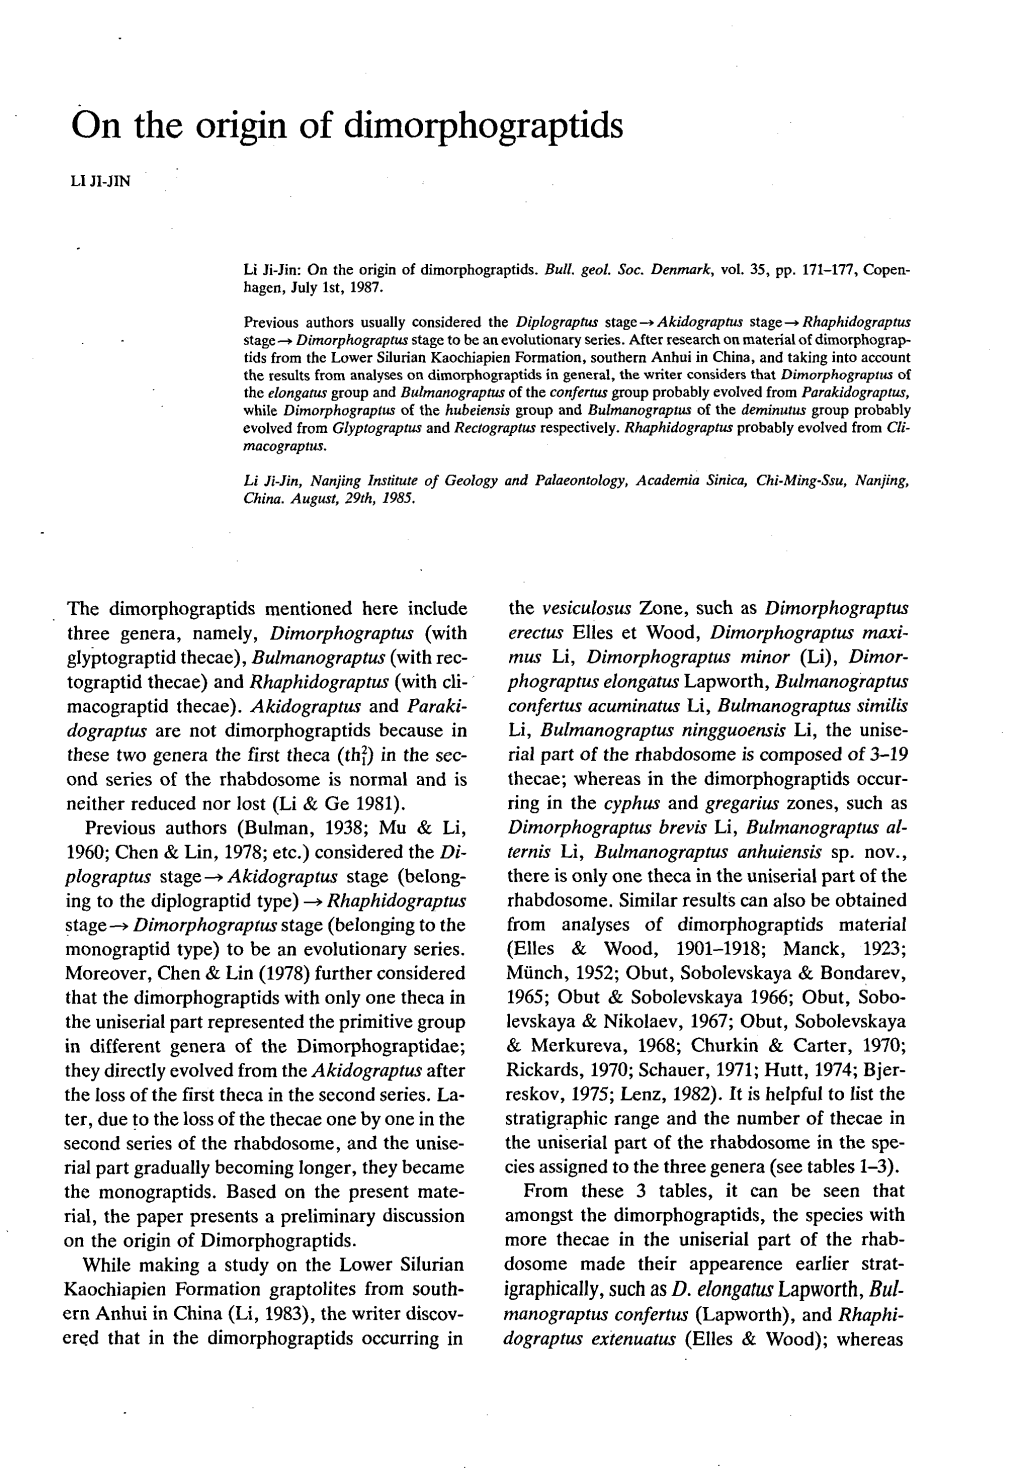 Bulletin of the Geological Society of Denmark, Vol. 35/3-4 Pp. 171-177